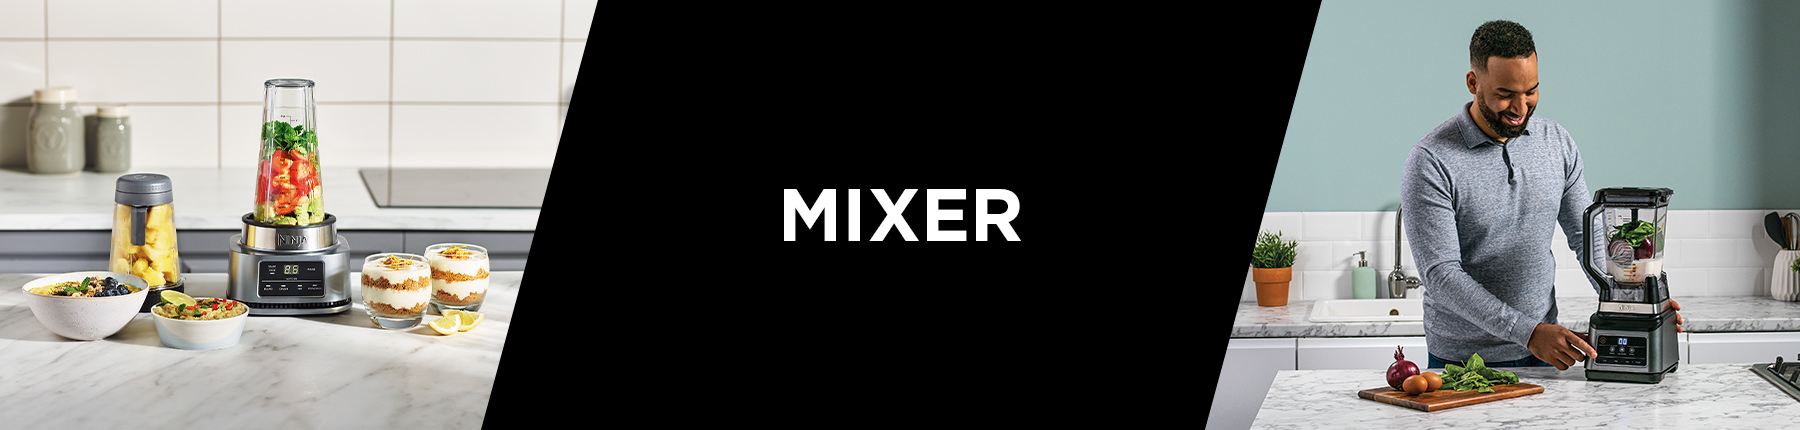 Mixer Ninja